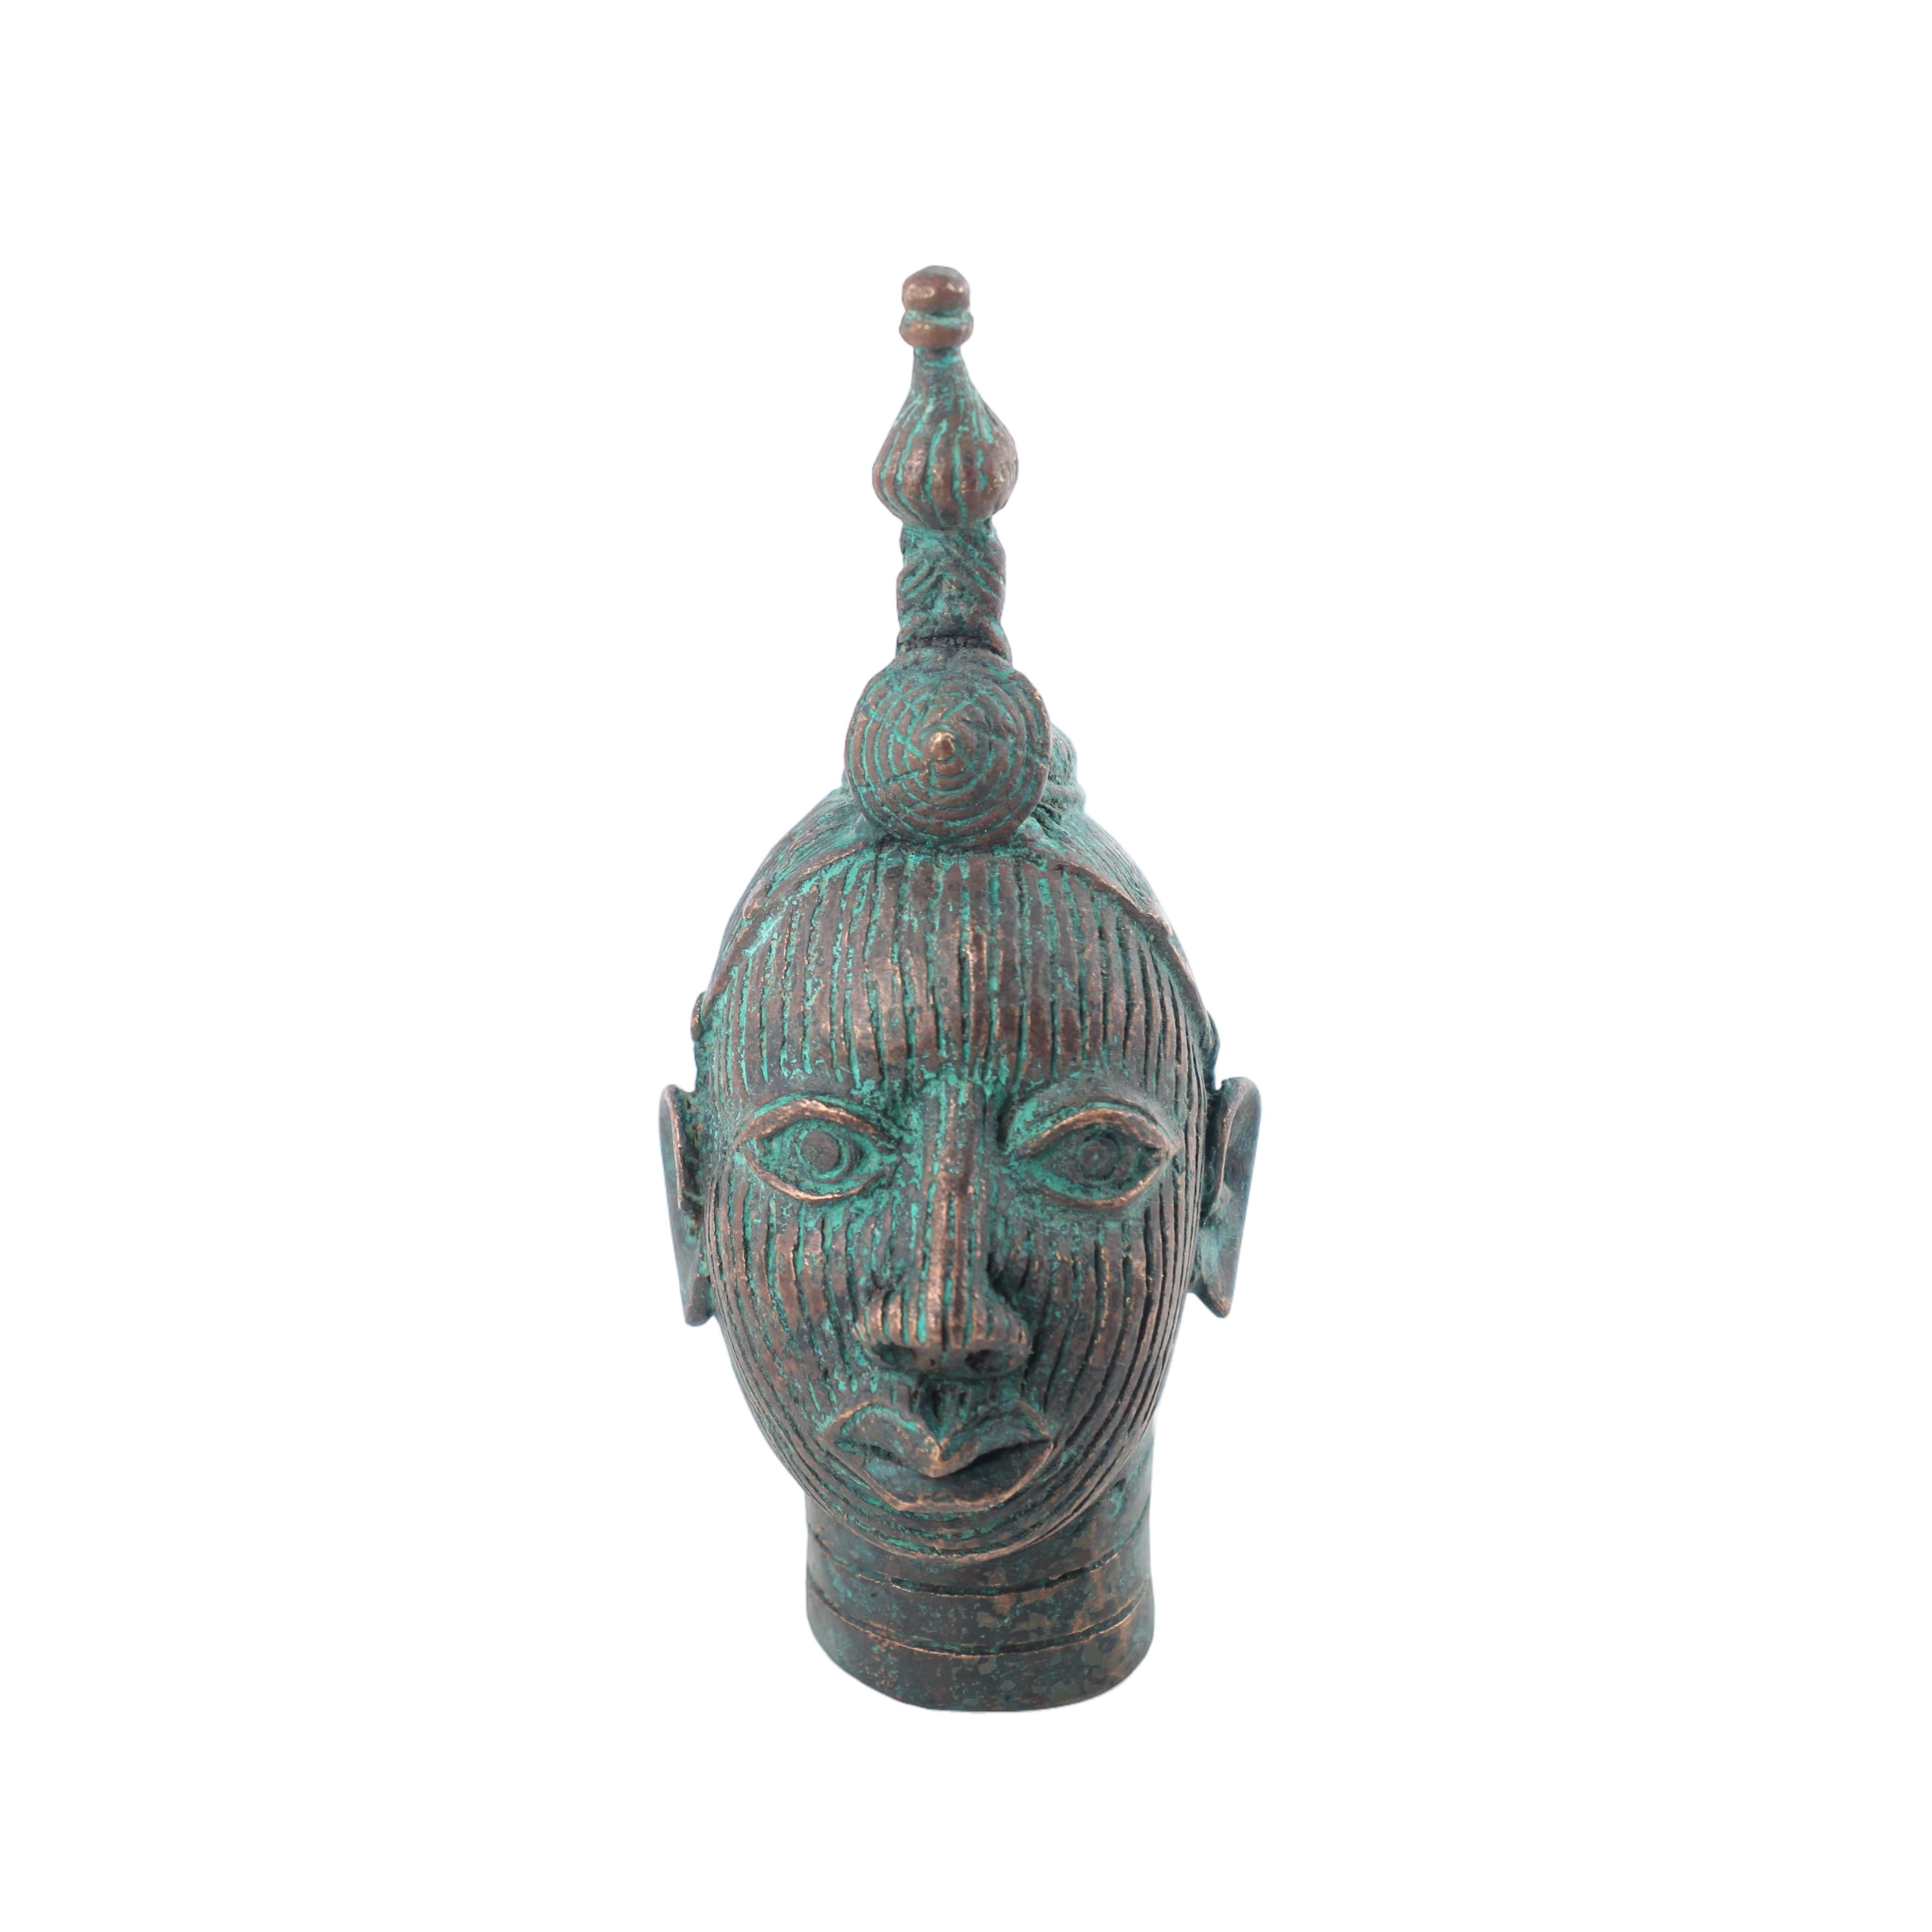 Yoruba Tribe Heads ~7.5" Tall - Heads